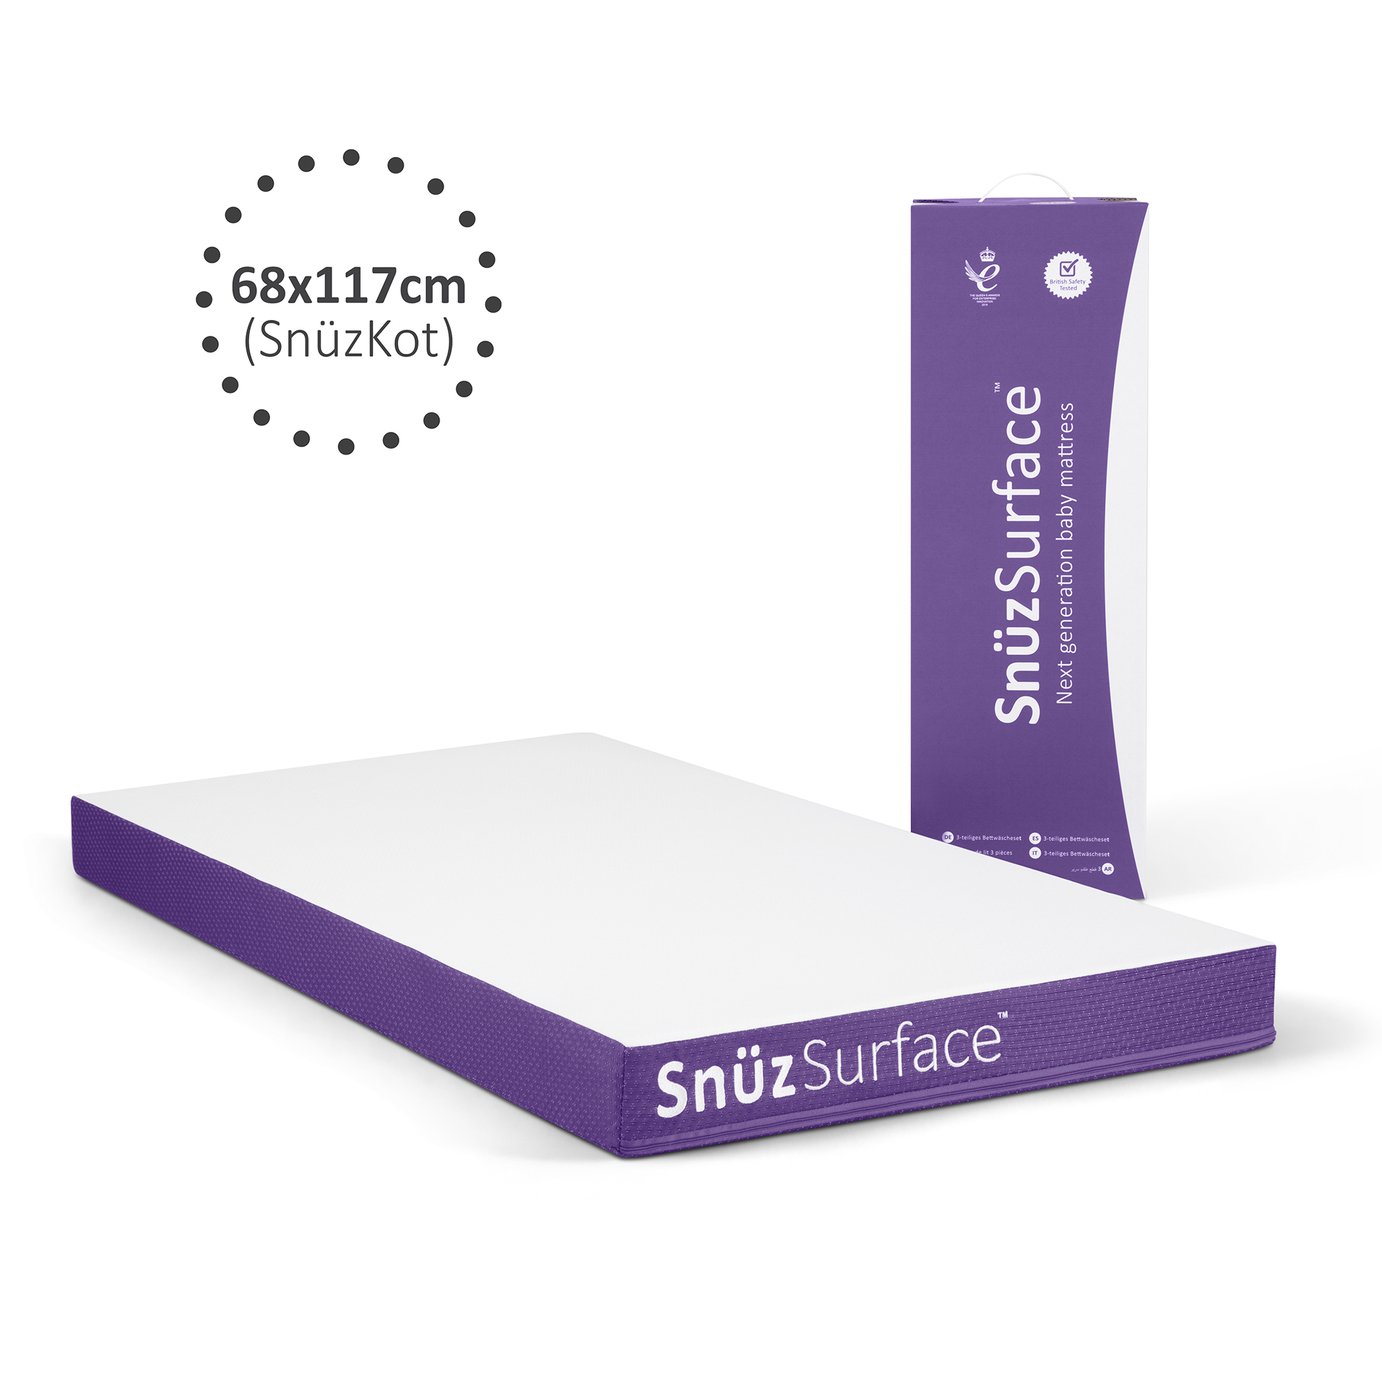 SnuzSurface 117 x 68cm Pocket Sprung Cot Bed Mattress Review